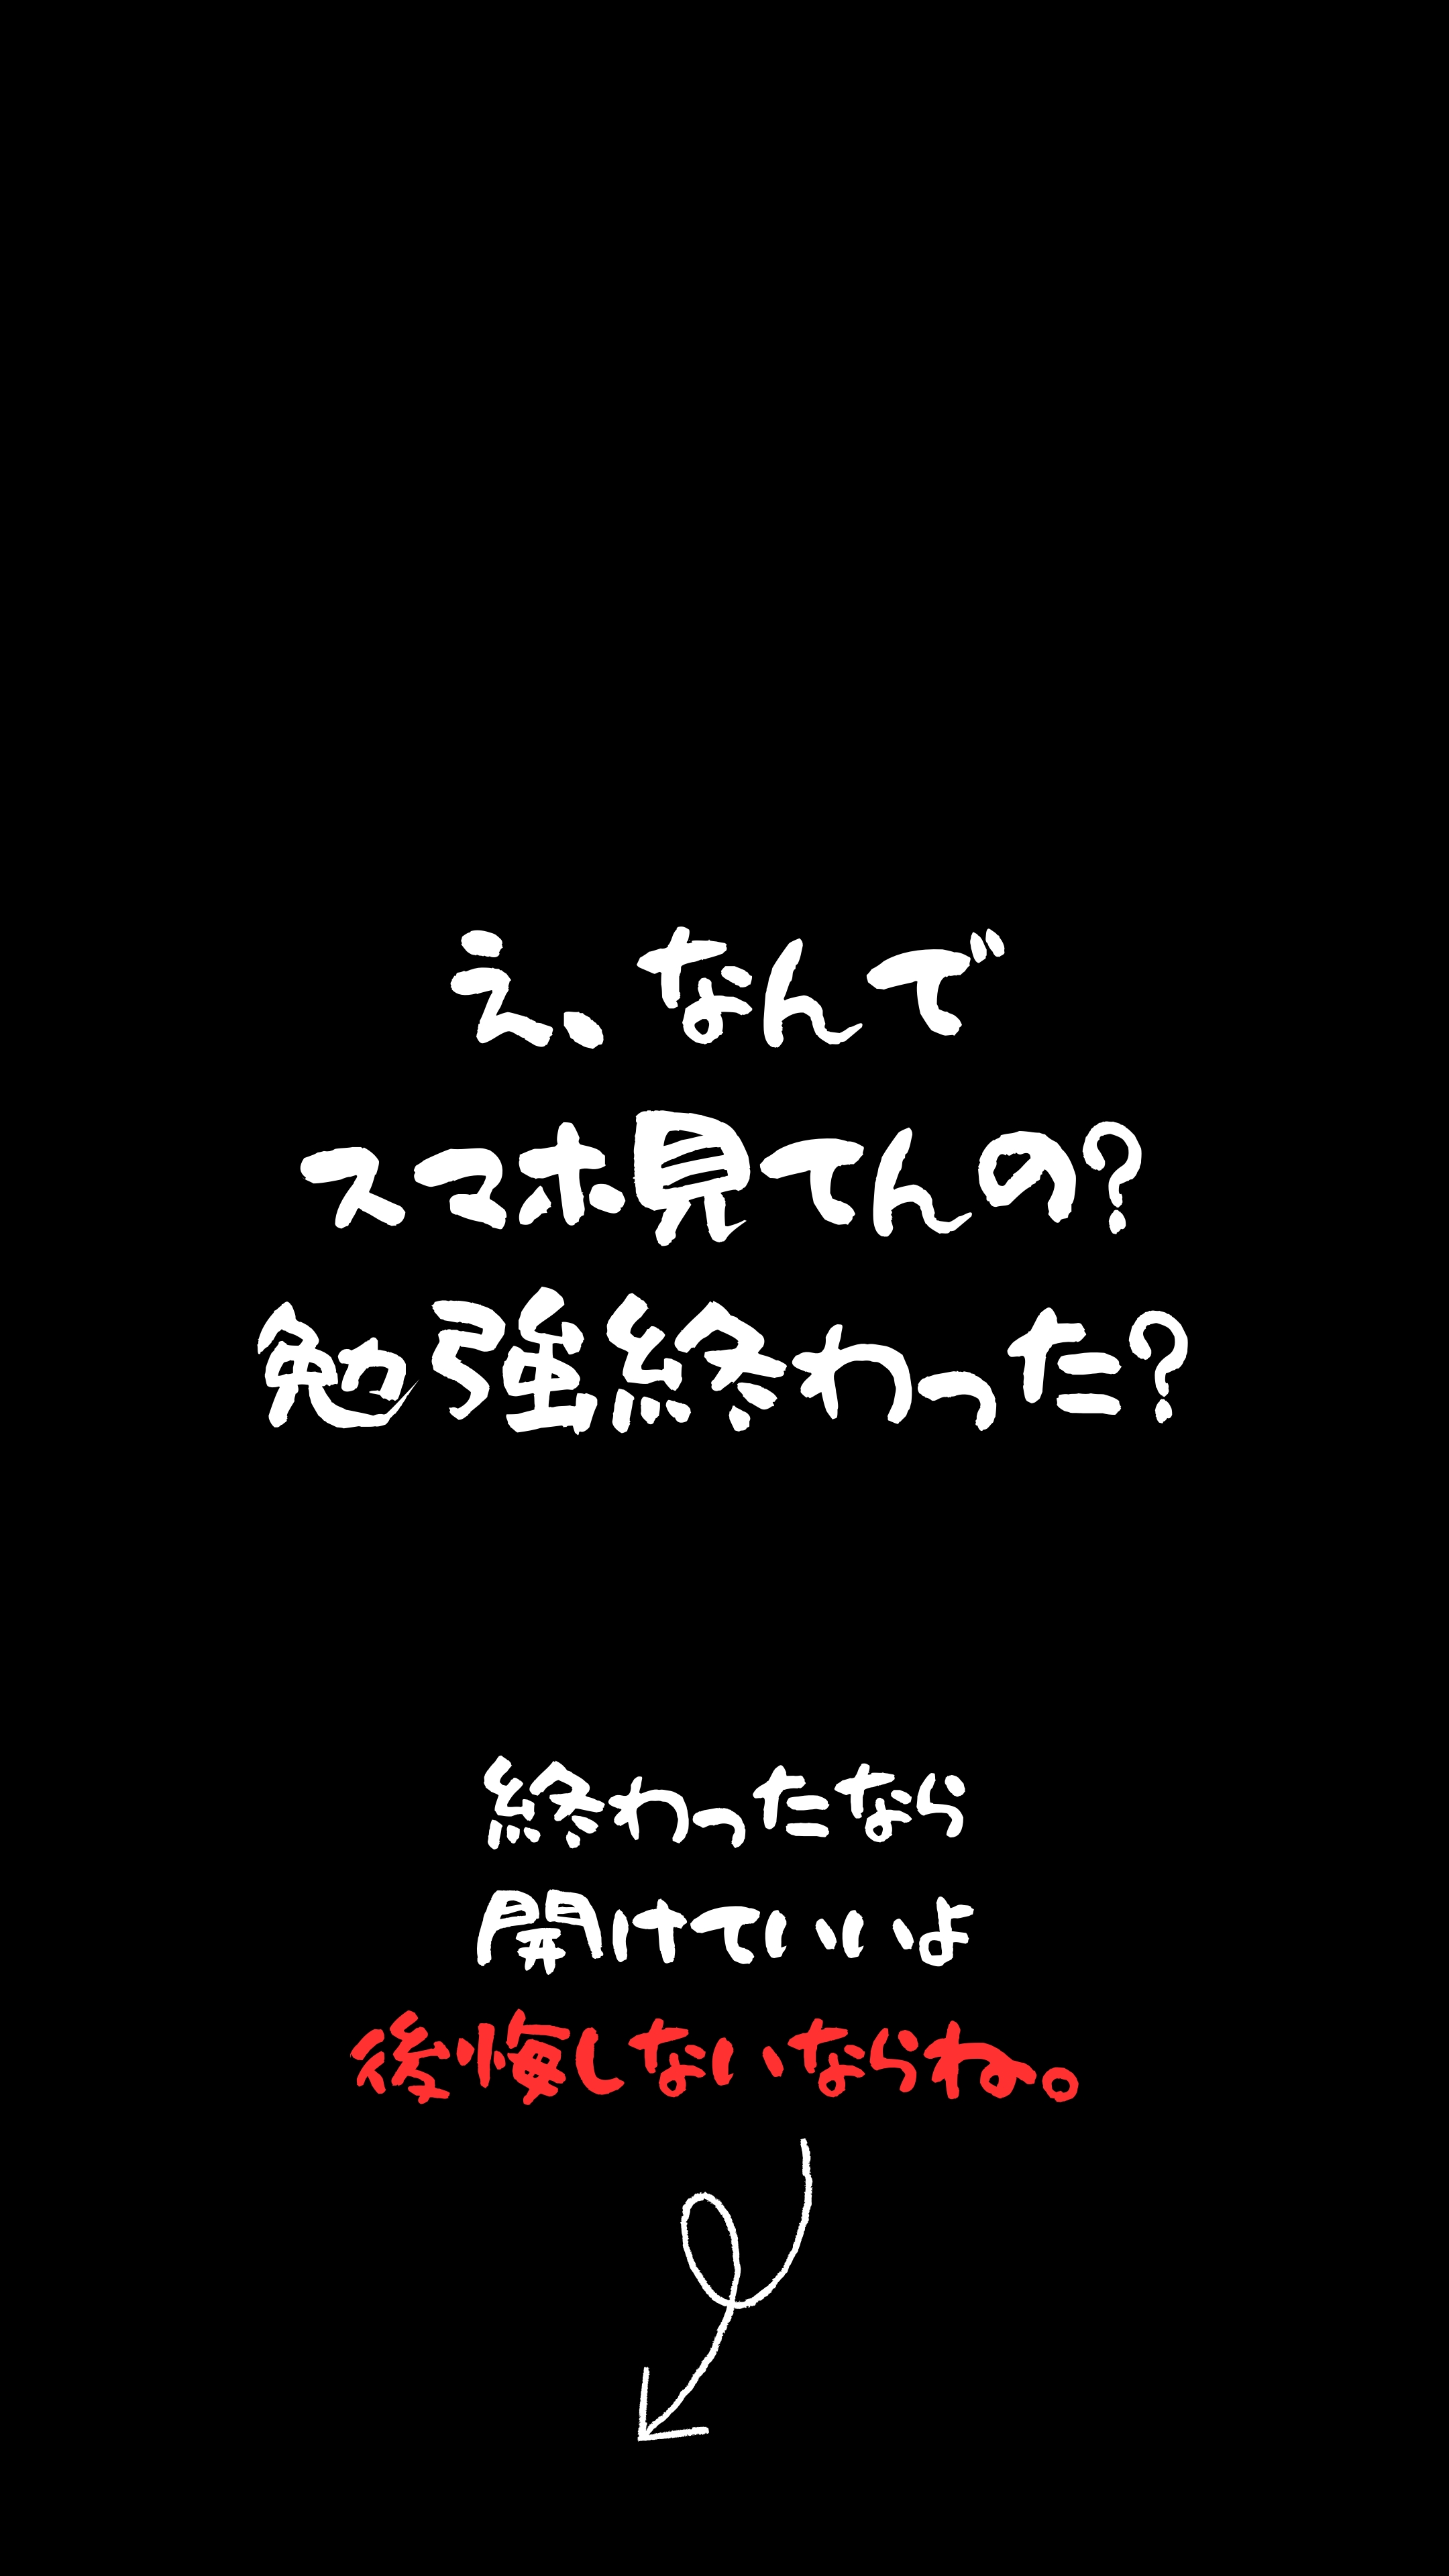 Mysterious Handwritten Japanese Question on Black Wallpaper[5ae7481a6d774cc0a166]